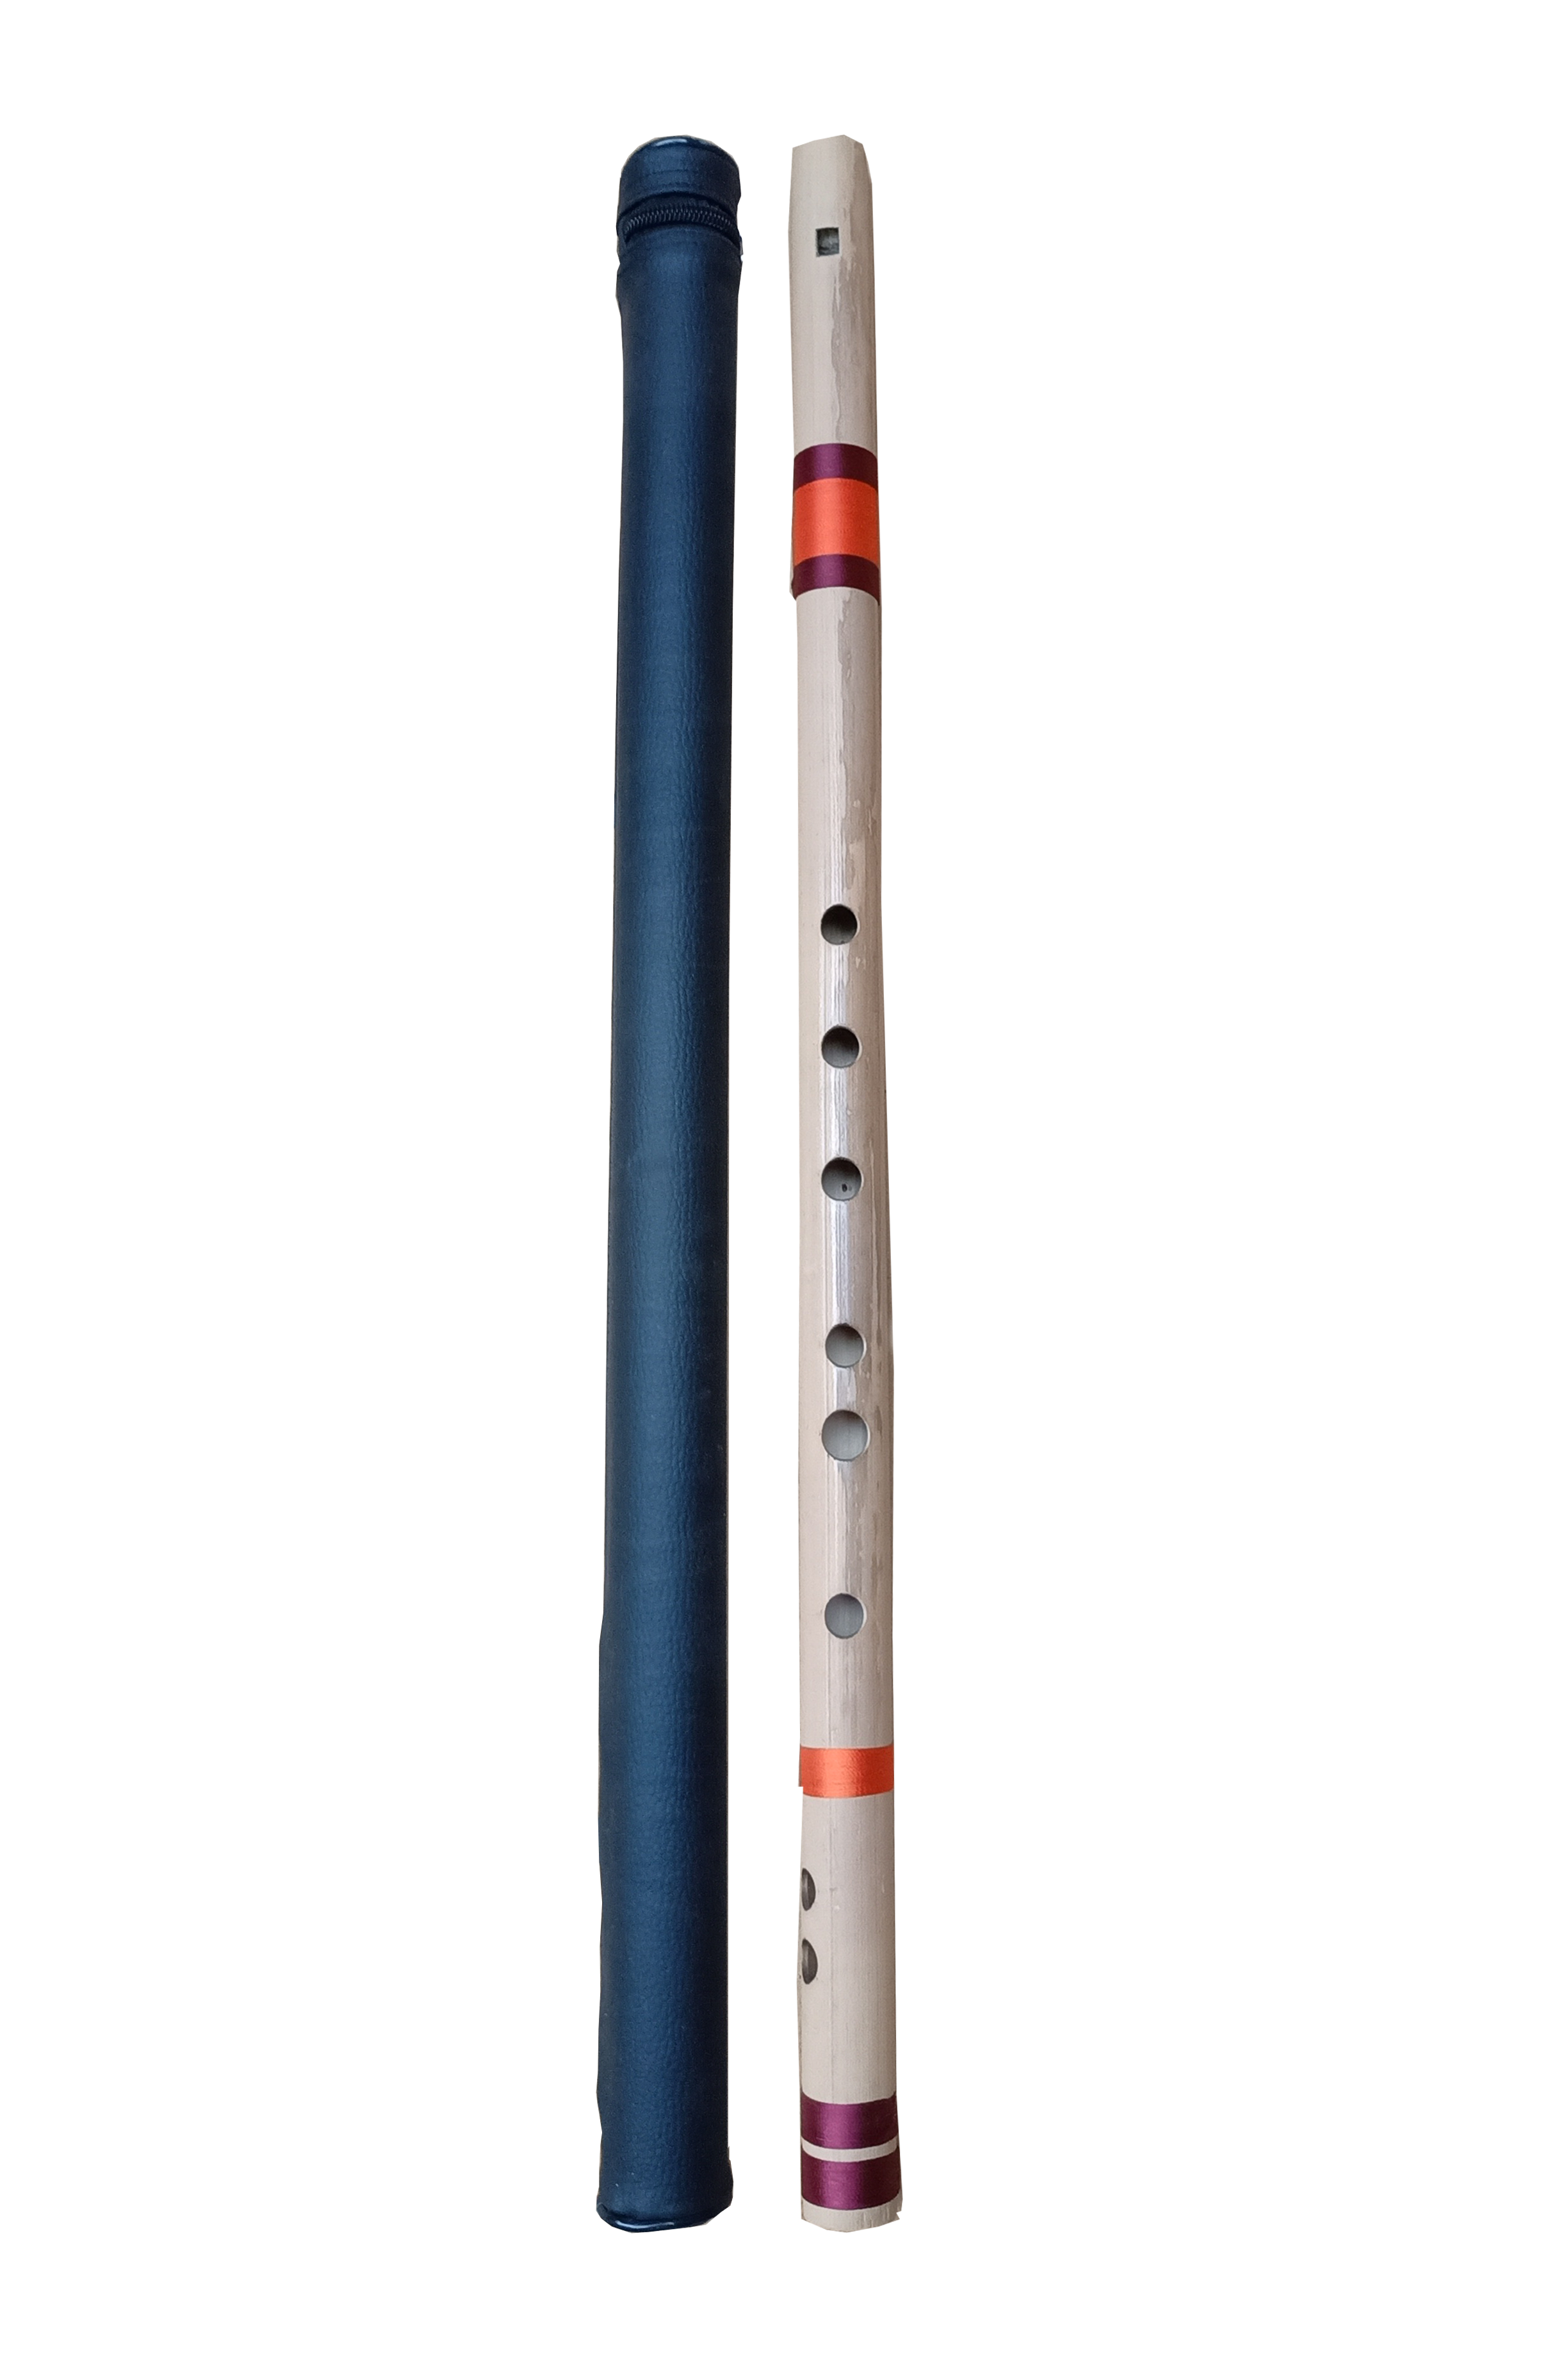 Straight Bass Bamboo flutes